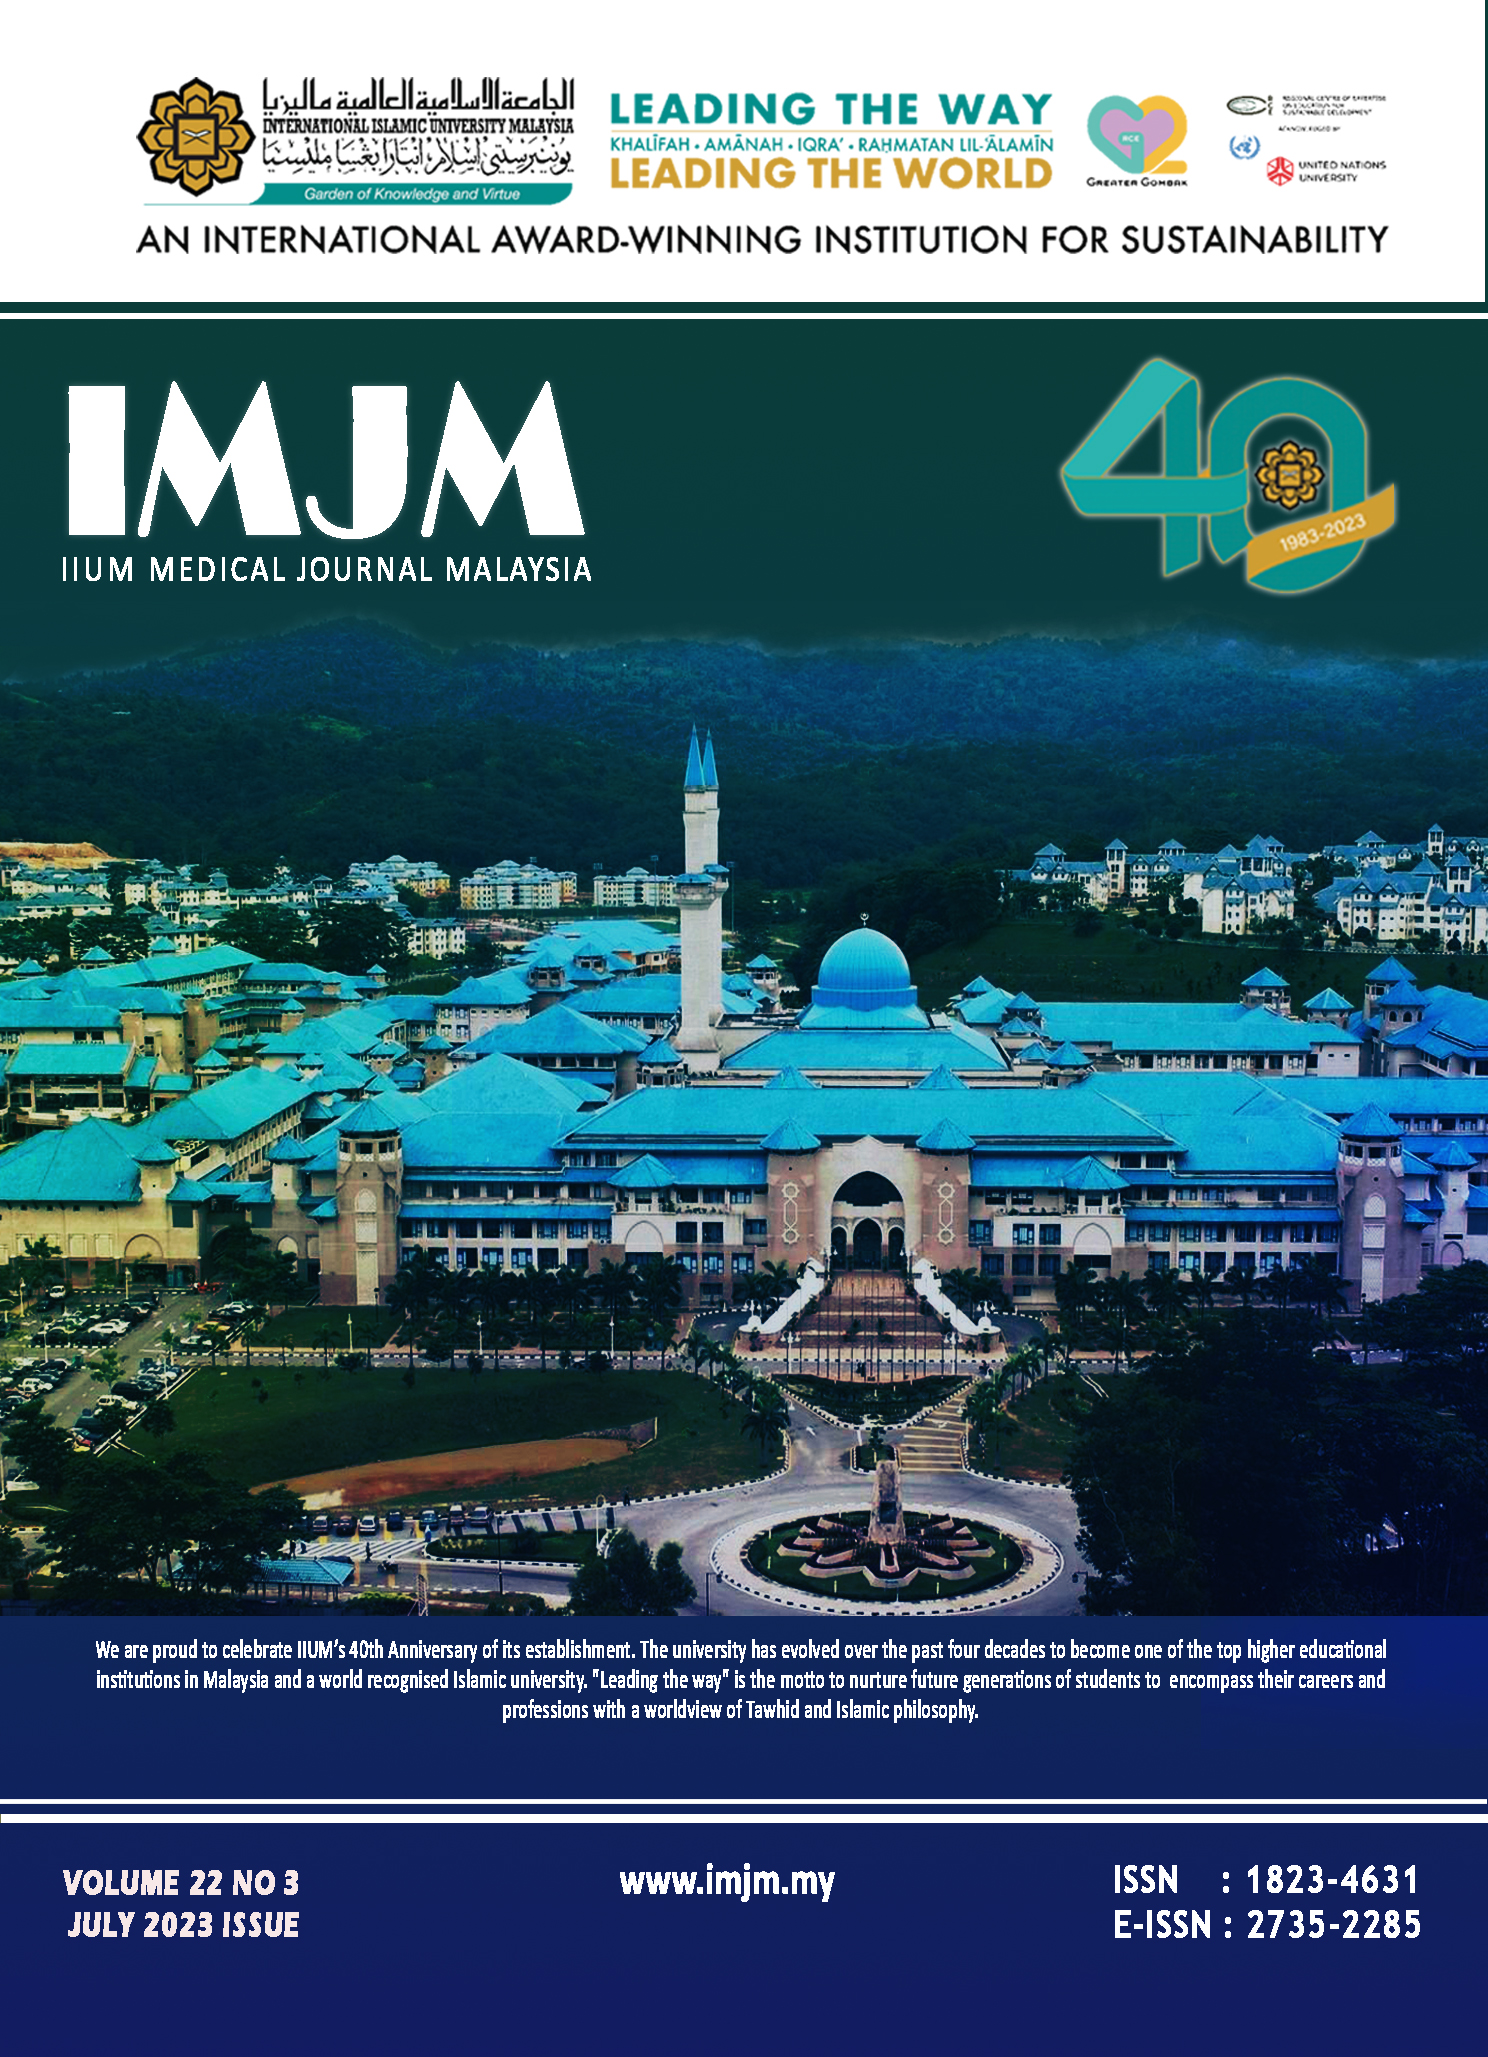 IIUM Medical Journal Malaysia